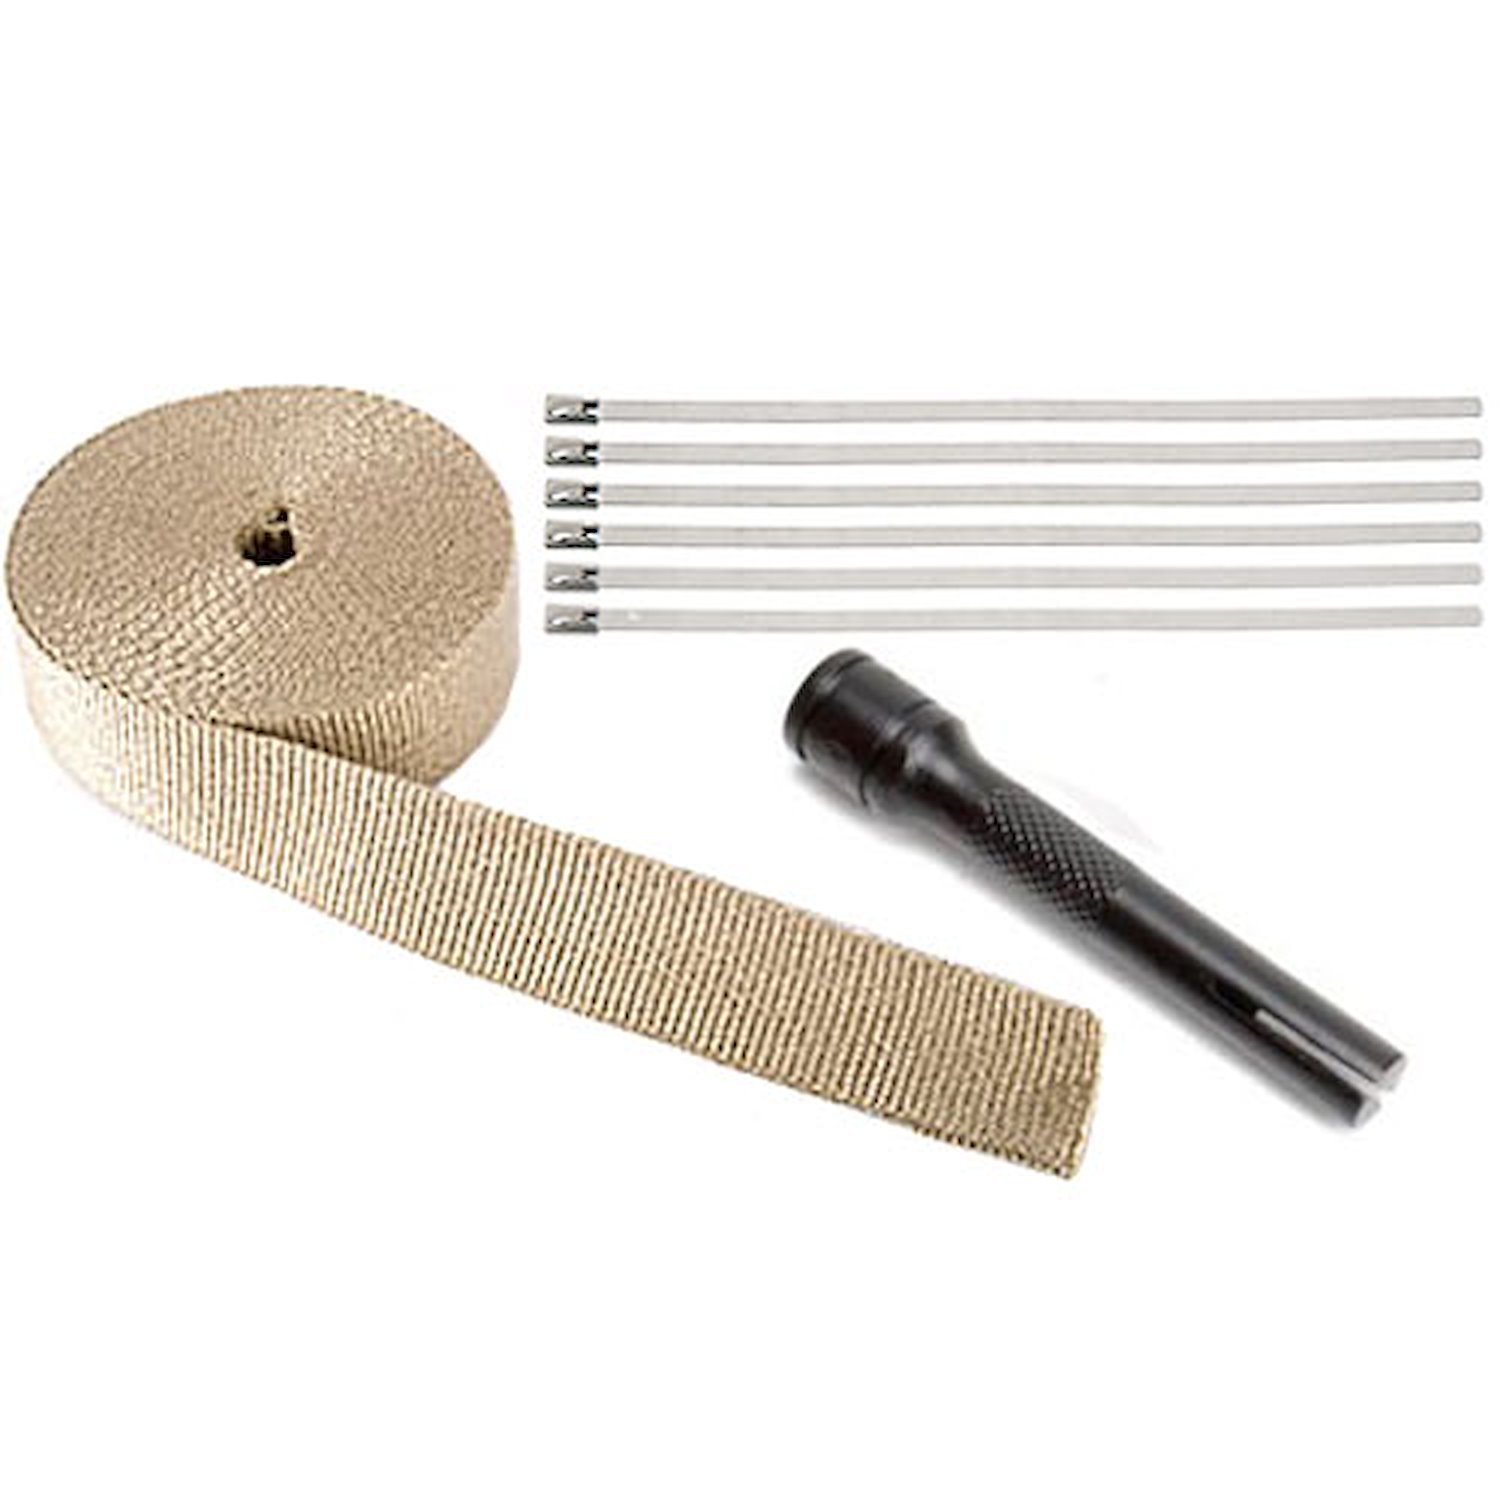 Locking Tie Tool Kit w/Tan Wrap Includes: 2